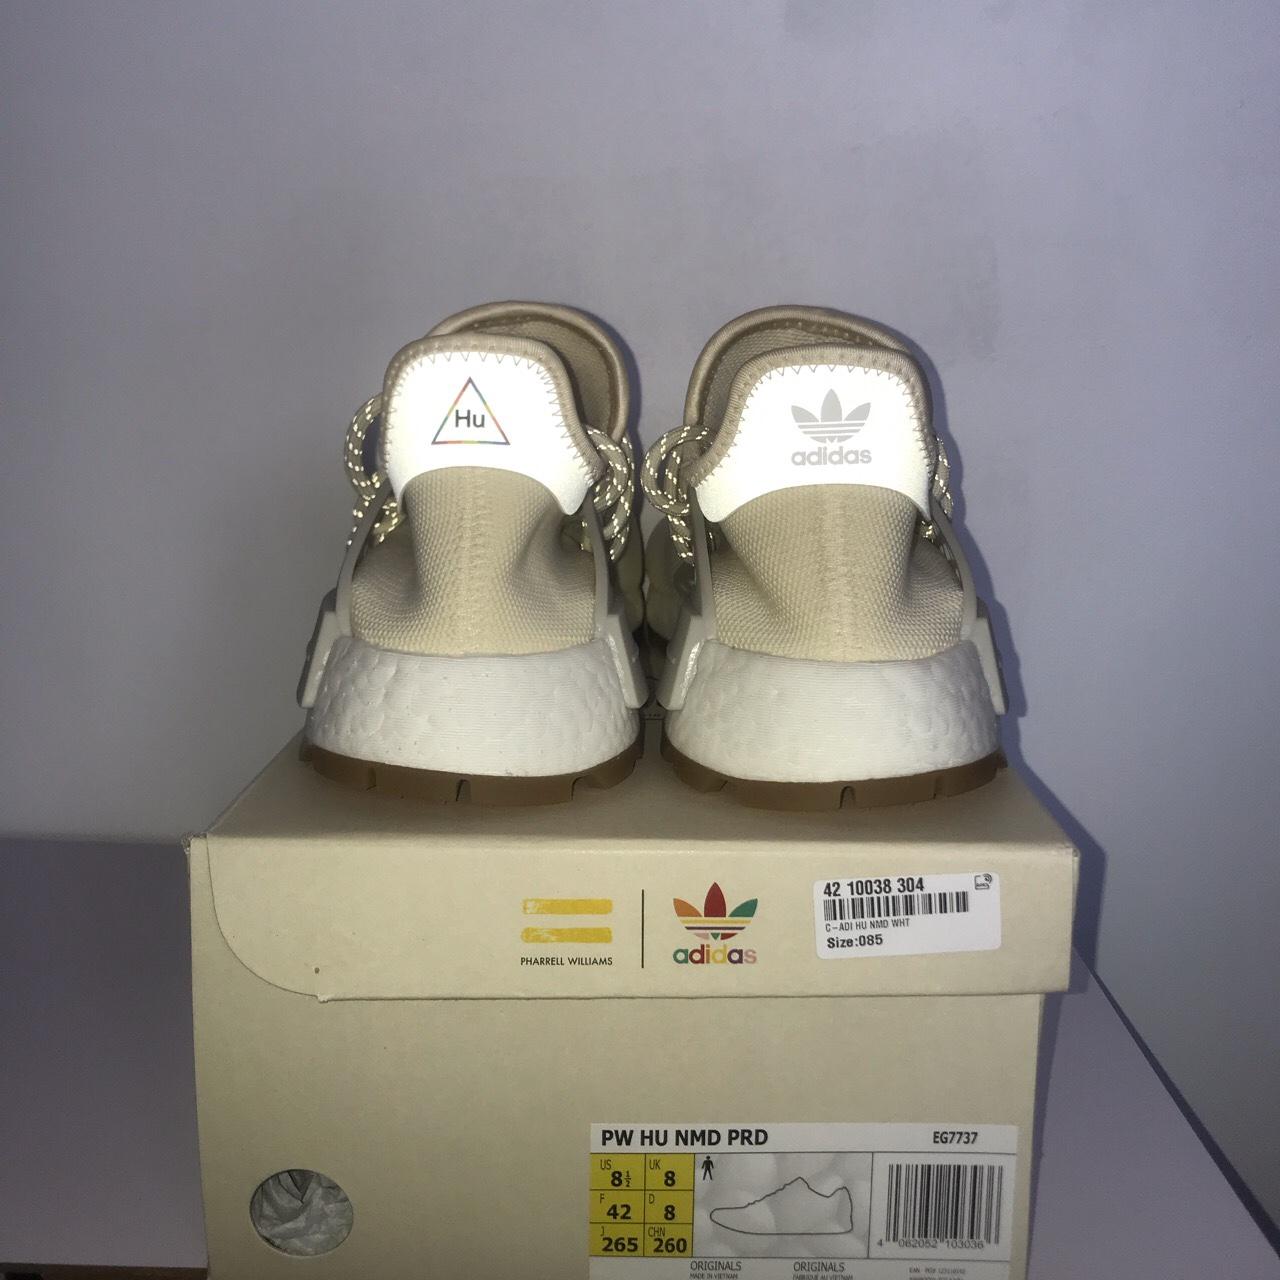  adidas Mens Pw Hu NMD Prd Pharrell Williams/Cream White Eg7737  Size | Shoes